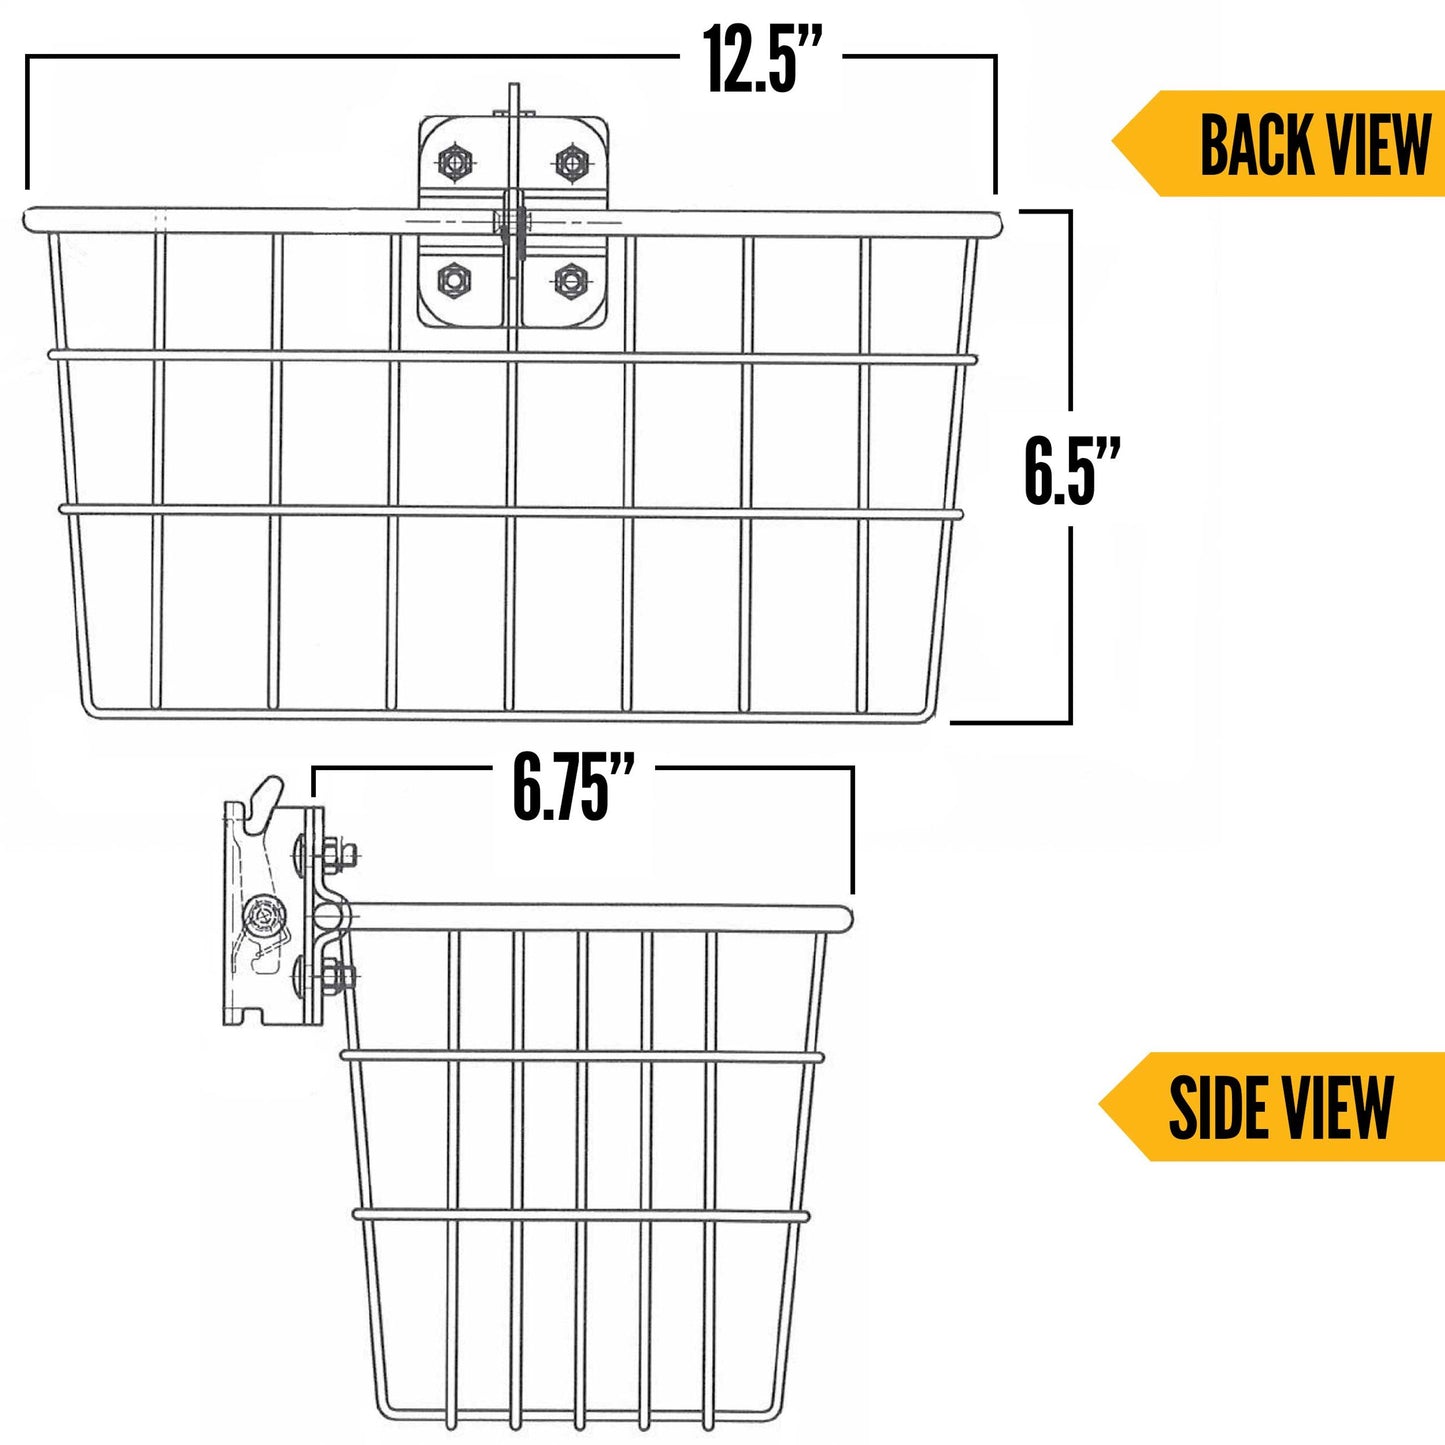 Plastic E-Track Basket for Storage | 6 x 7 x 4 | USCC